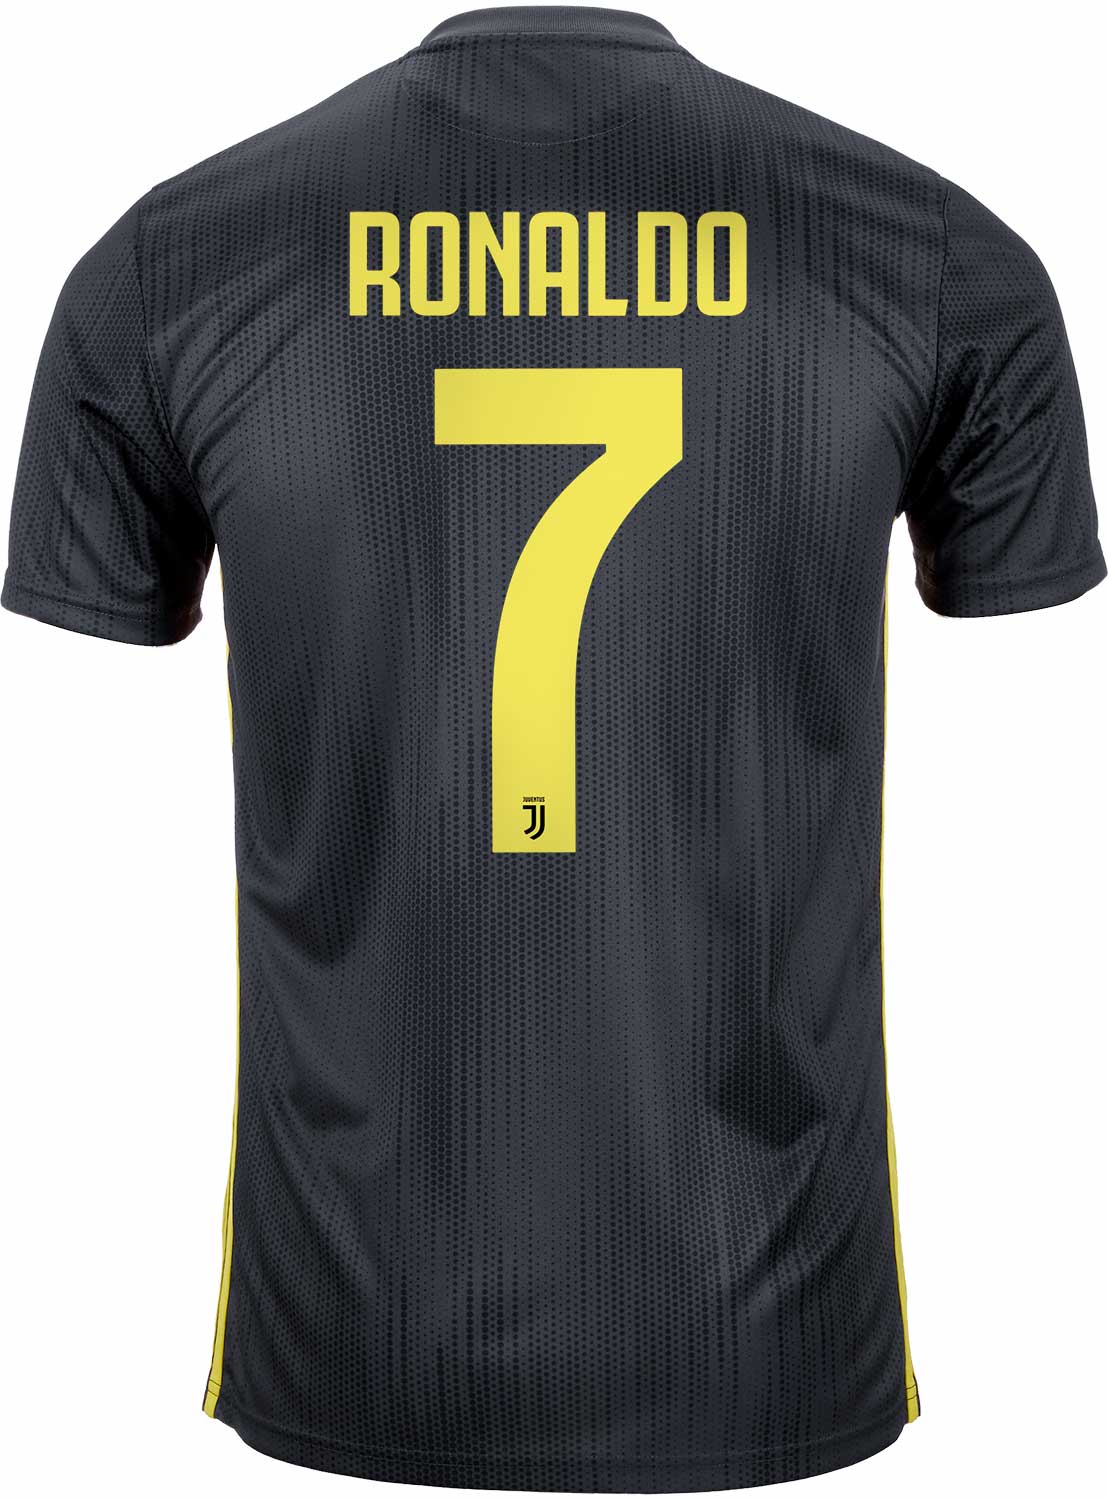 ronaldo grey jersey